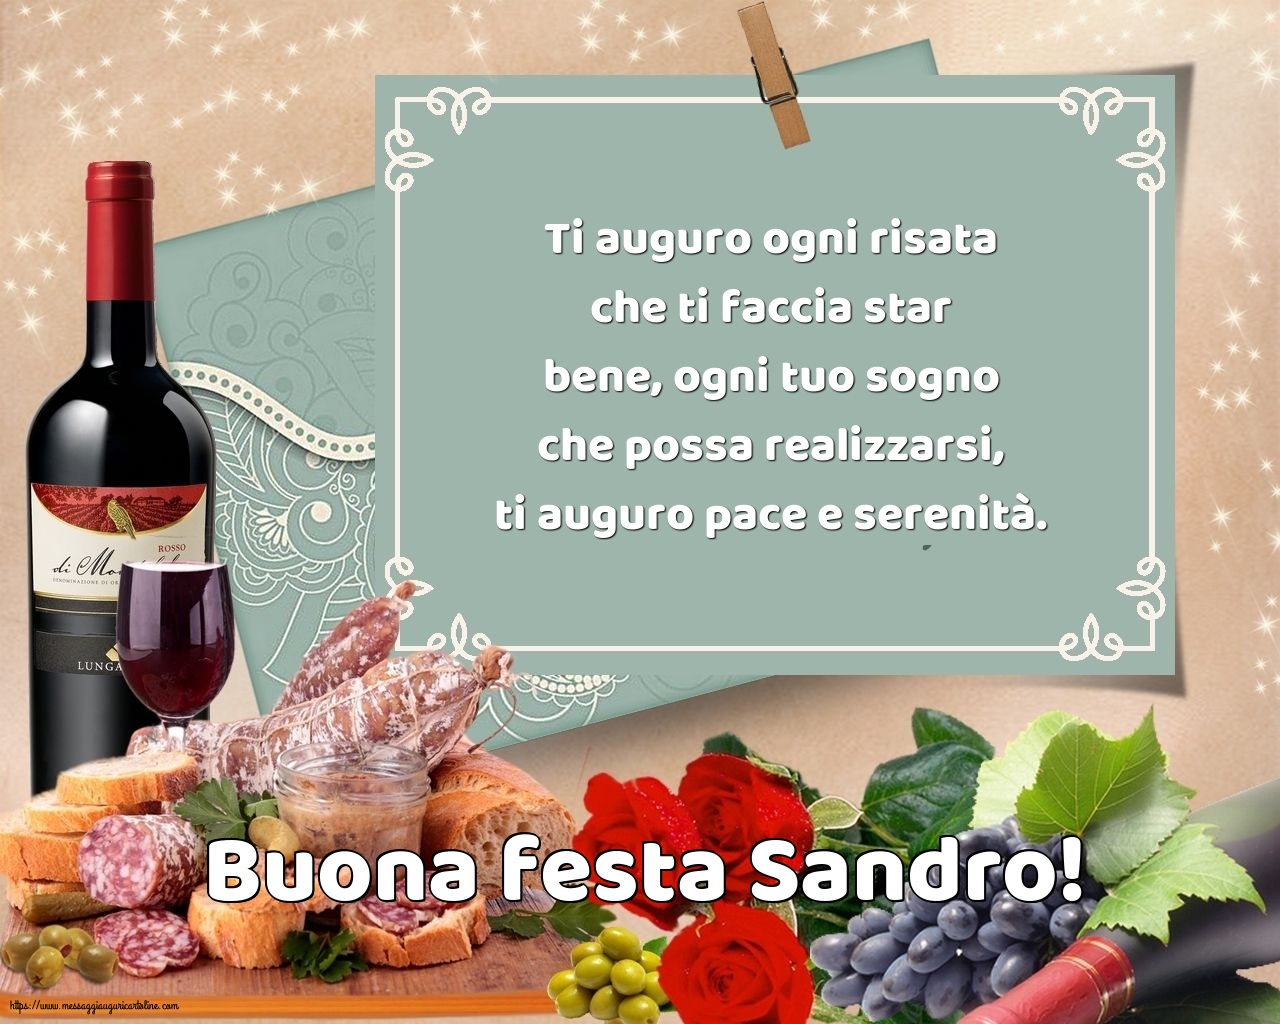 Buona festa Sandro!